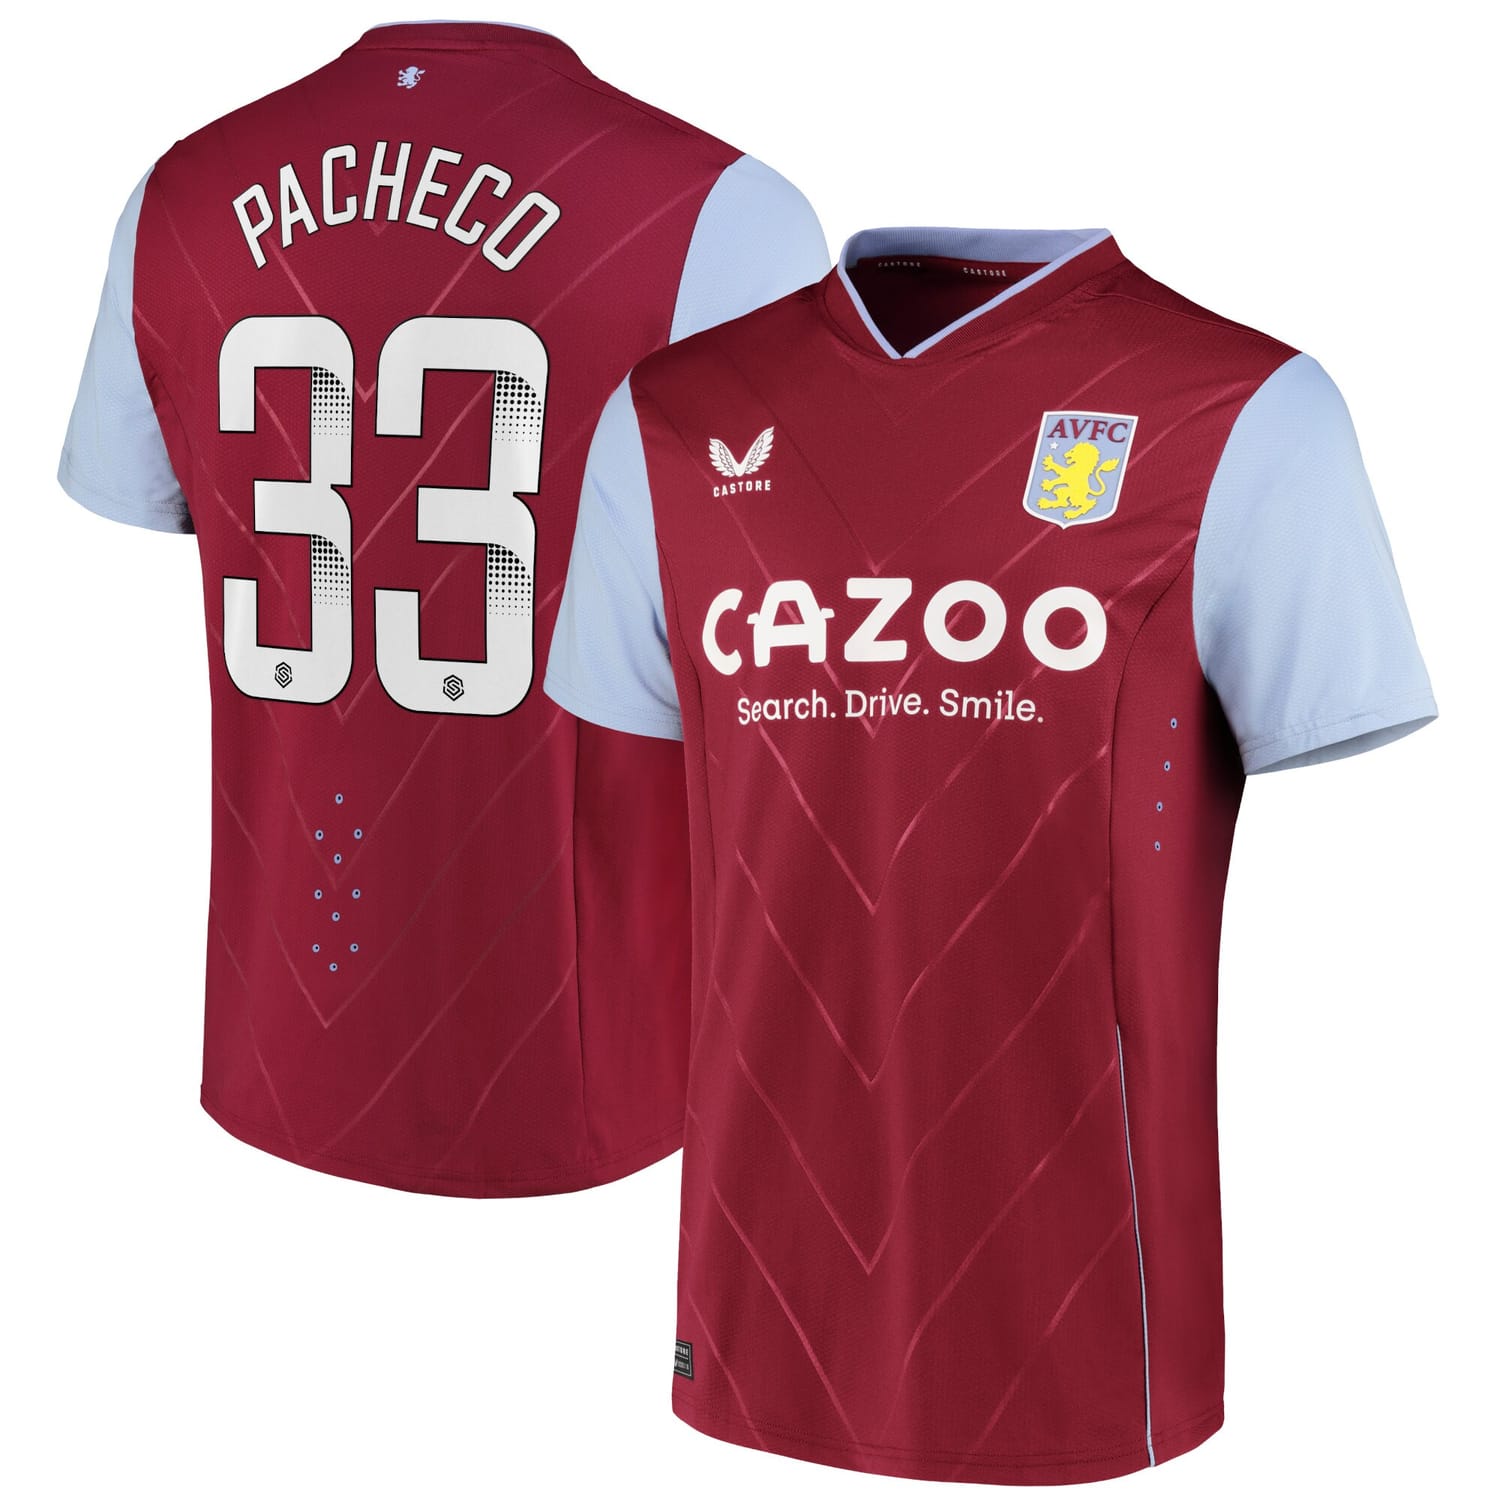 Premier League Aston Villa Home WSL Pro Jersey Shirt 2022-23 player Mayumi Pacheco 33 printing for Men